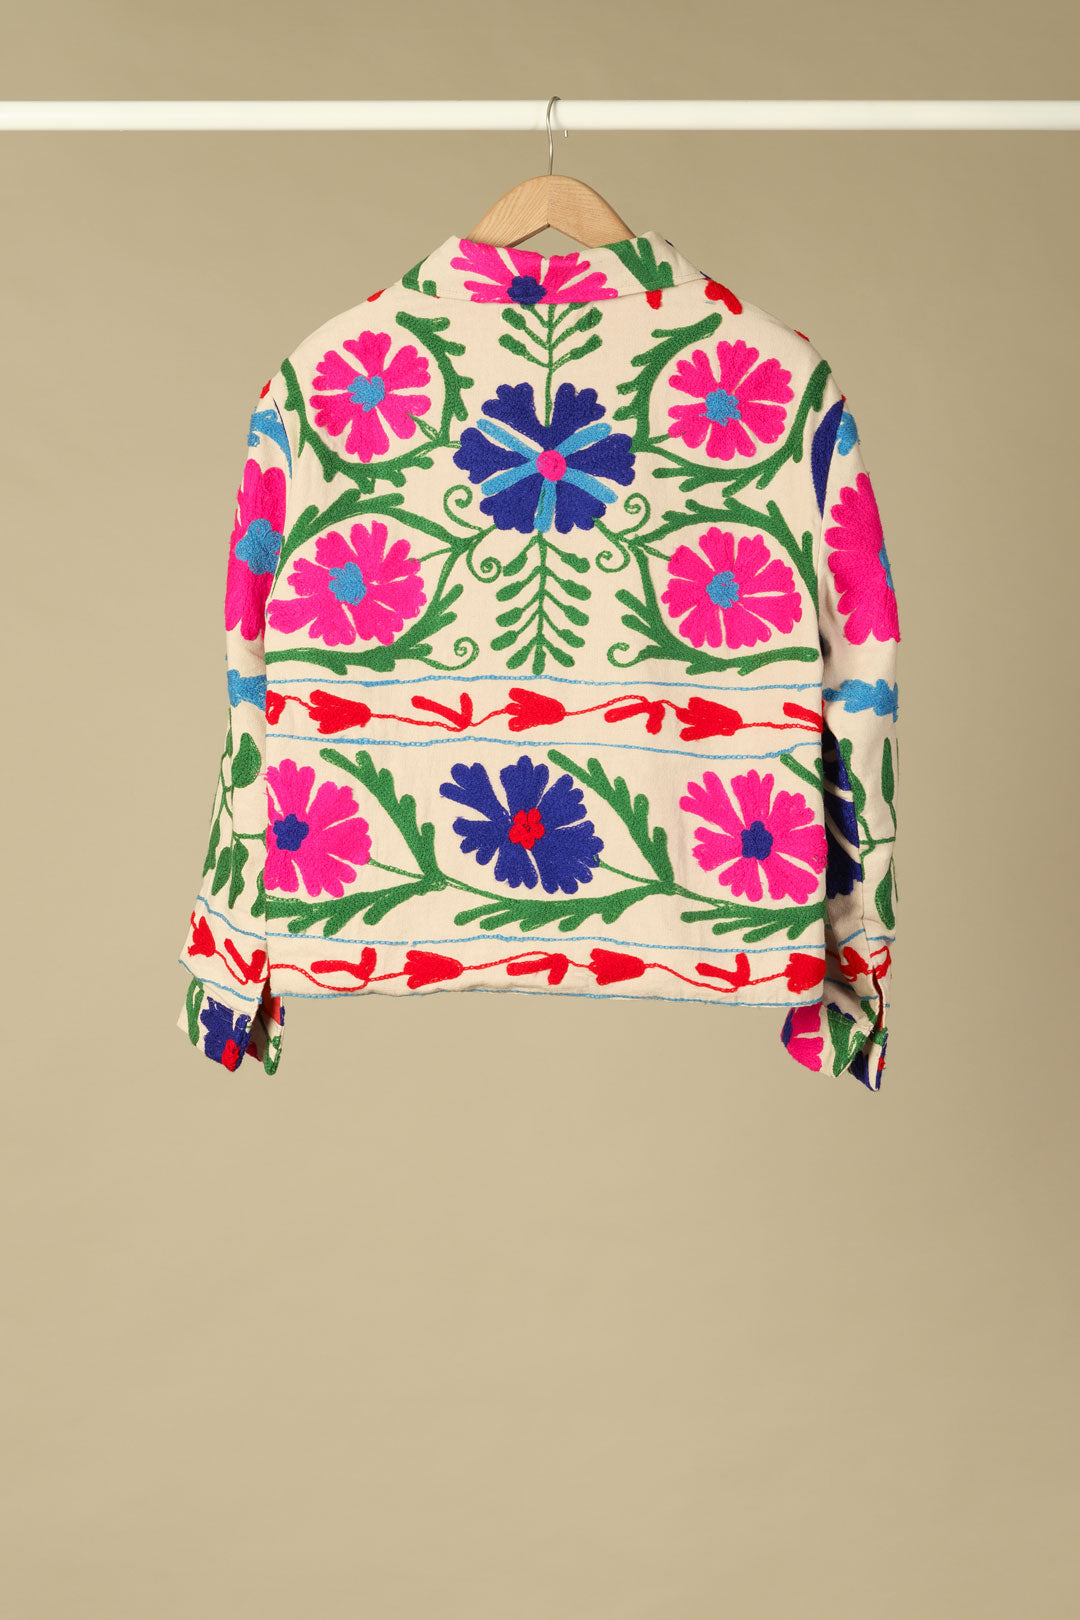 Arturo multicolour embroidered jacket